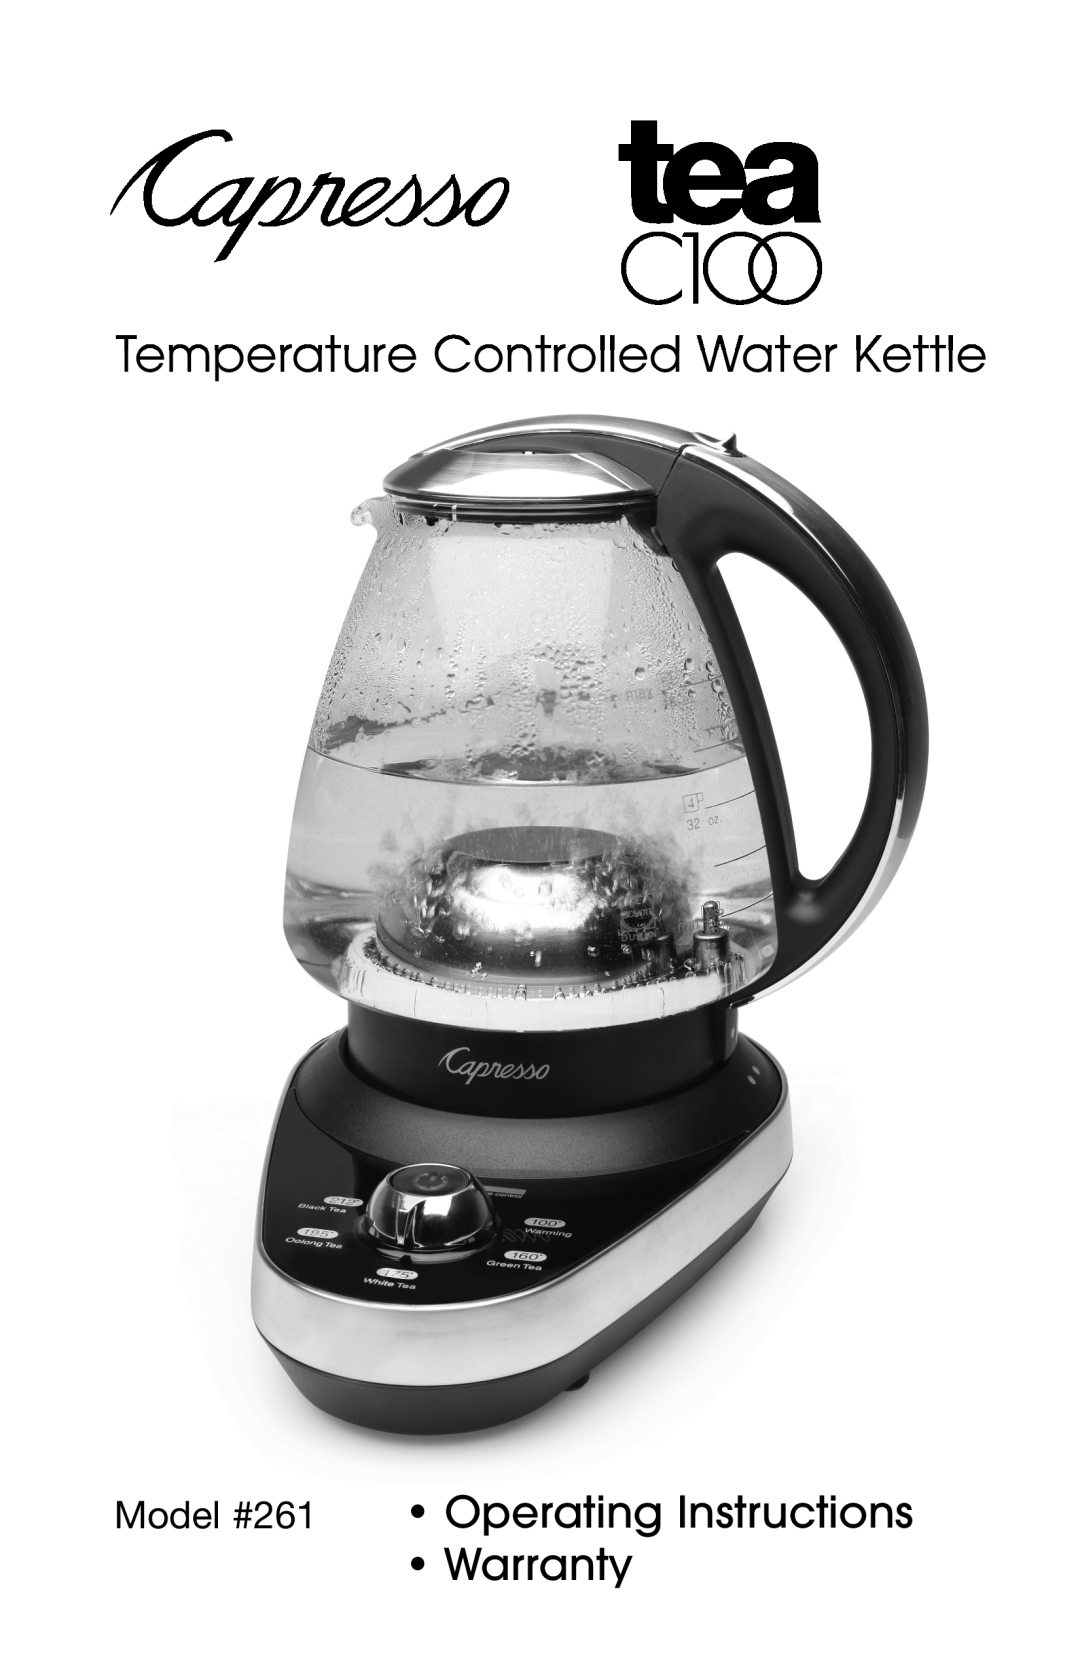 Capresso warranty C1OO, Temperature Controlled Water Kettle, Operating Instructions Warranty, Model #261 